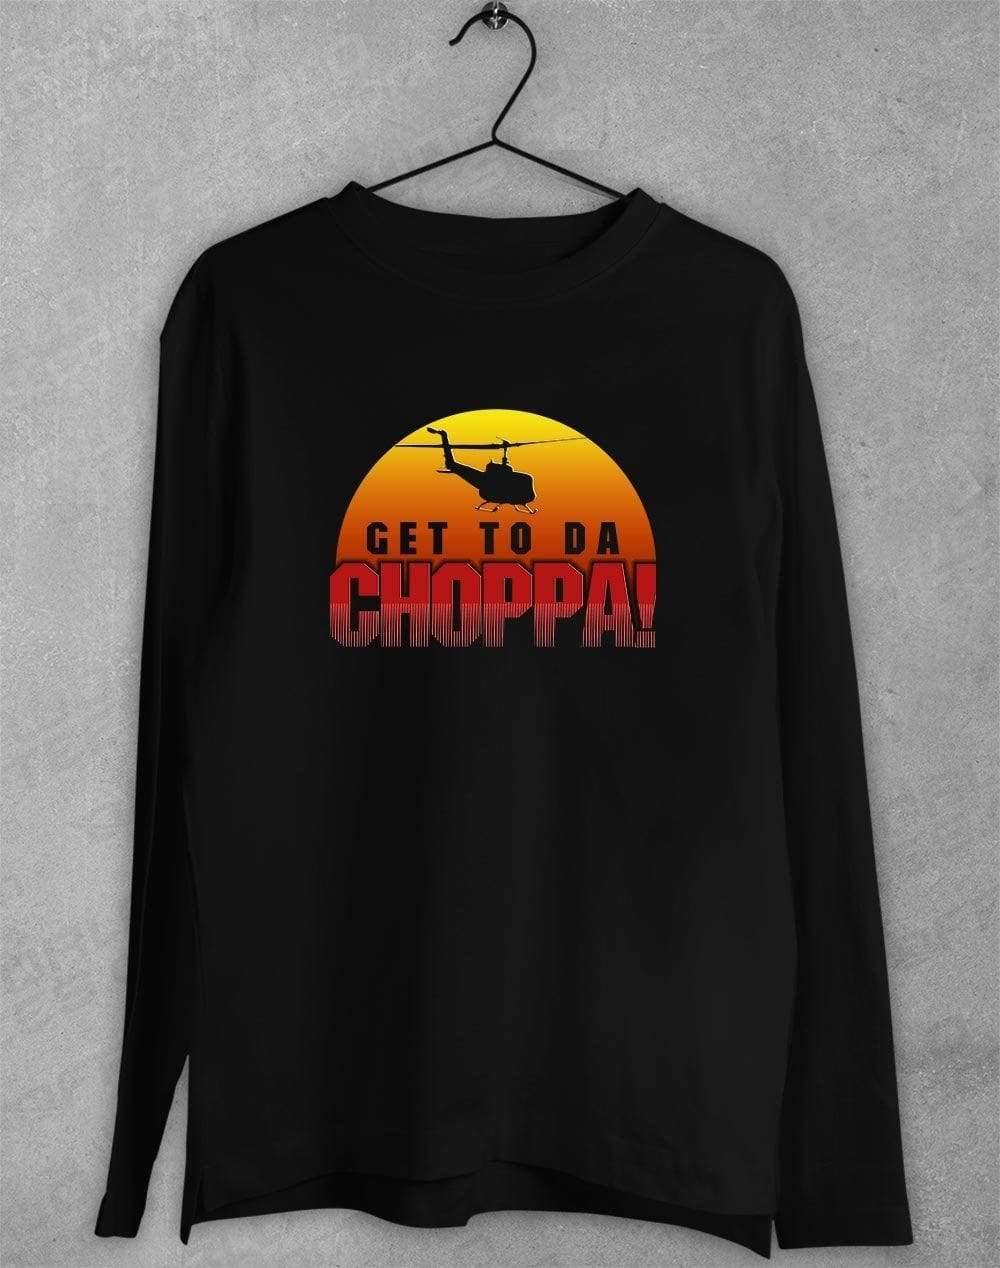 Get To Da Choppa Long Sleeve T-Shirt S / Black  - Off World Tees